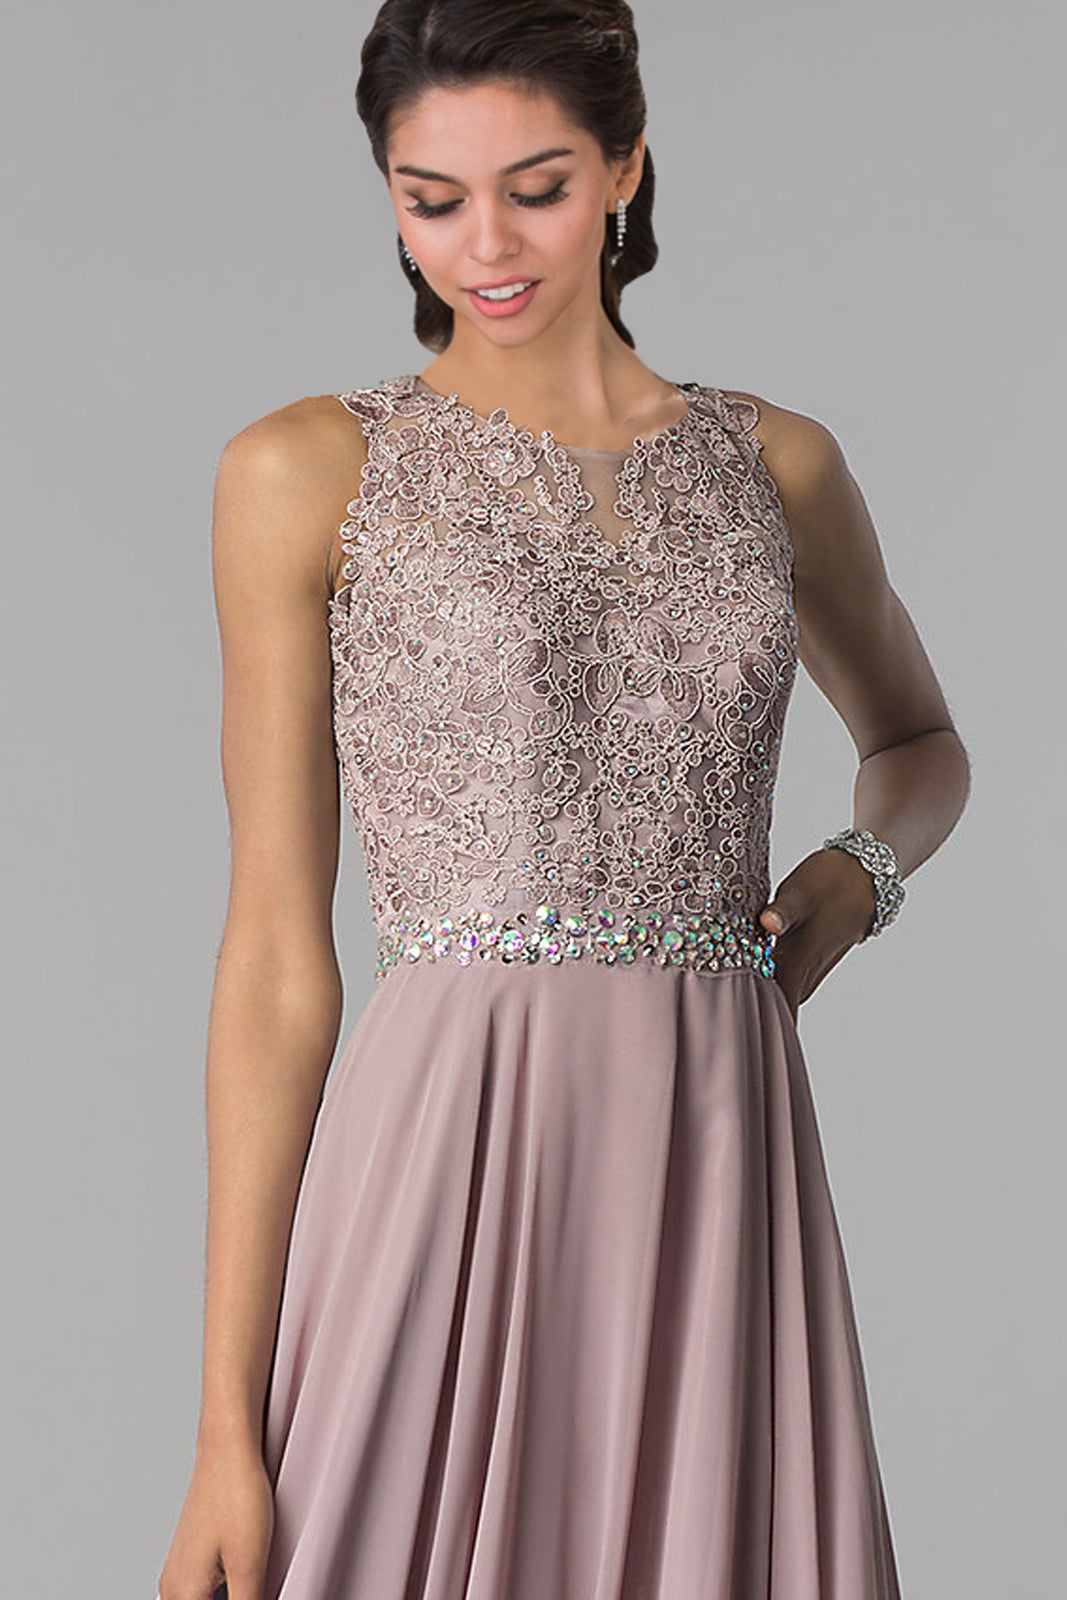 Elizabeth K - GL2417 - Jewel Embellished Lace A-Line Gown - Special Occasion/Curves